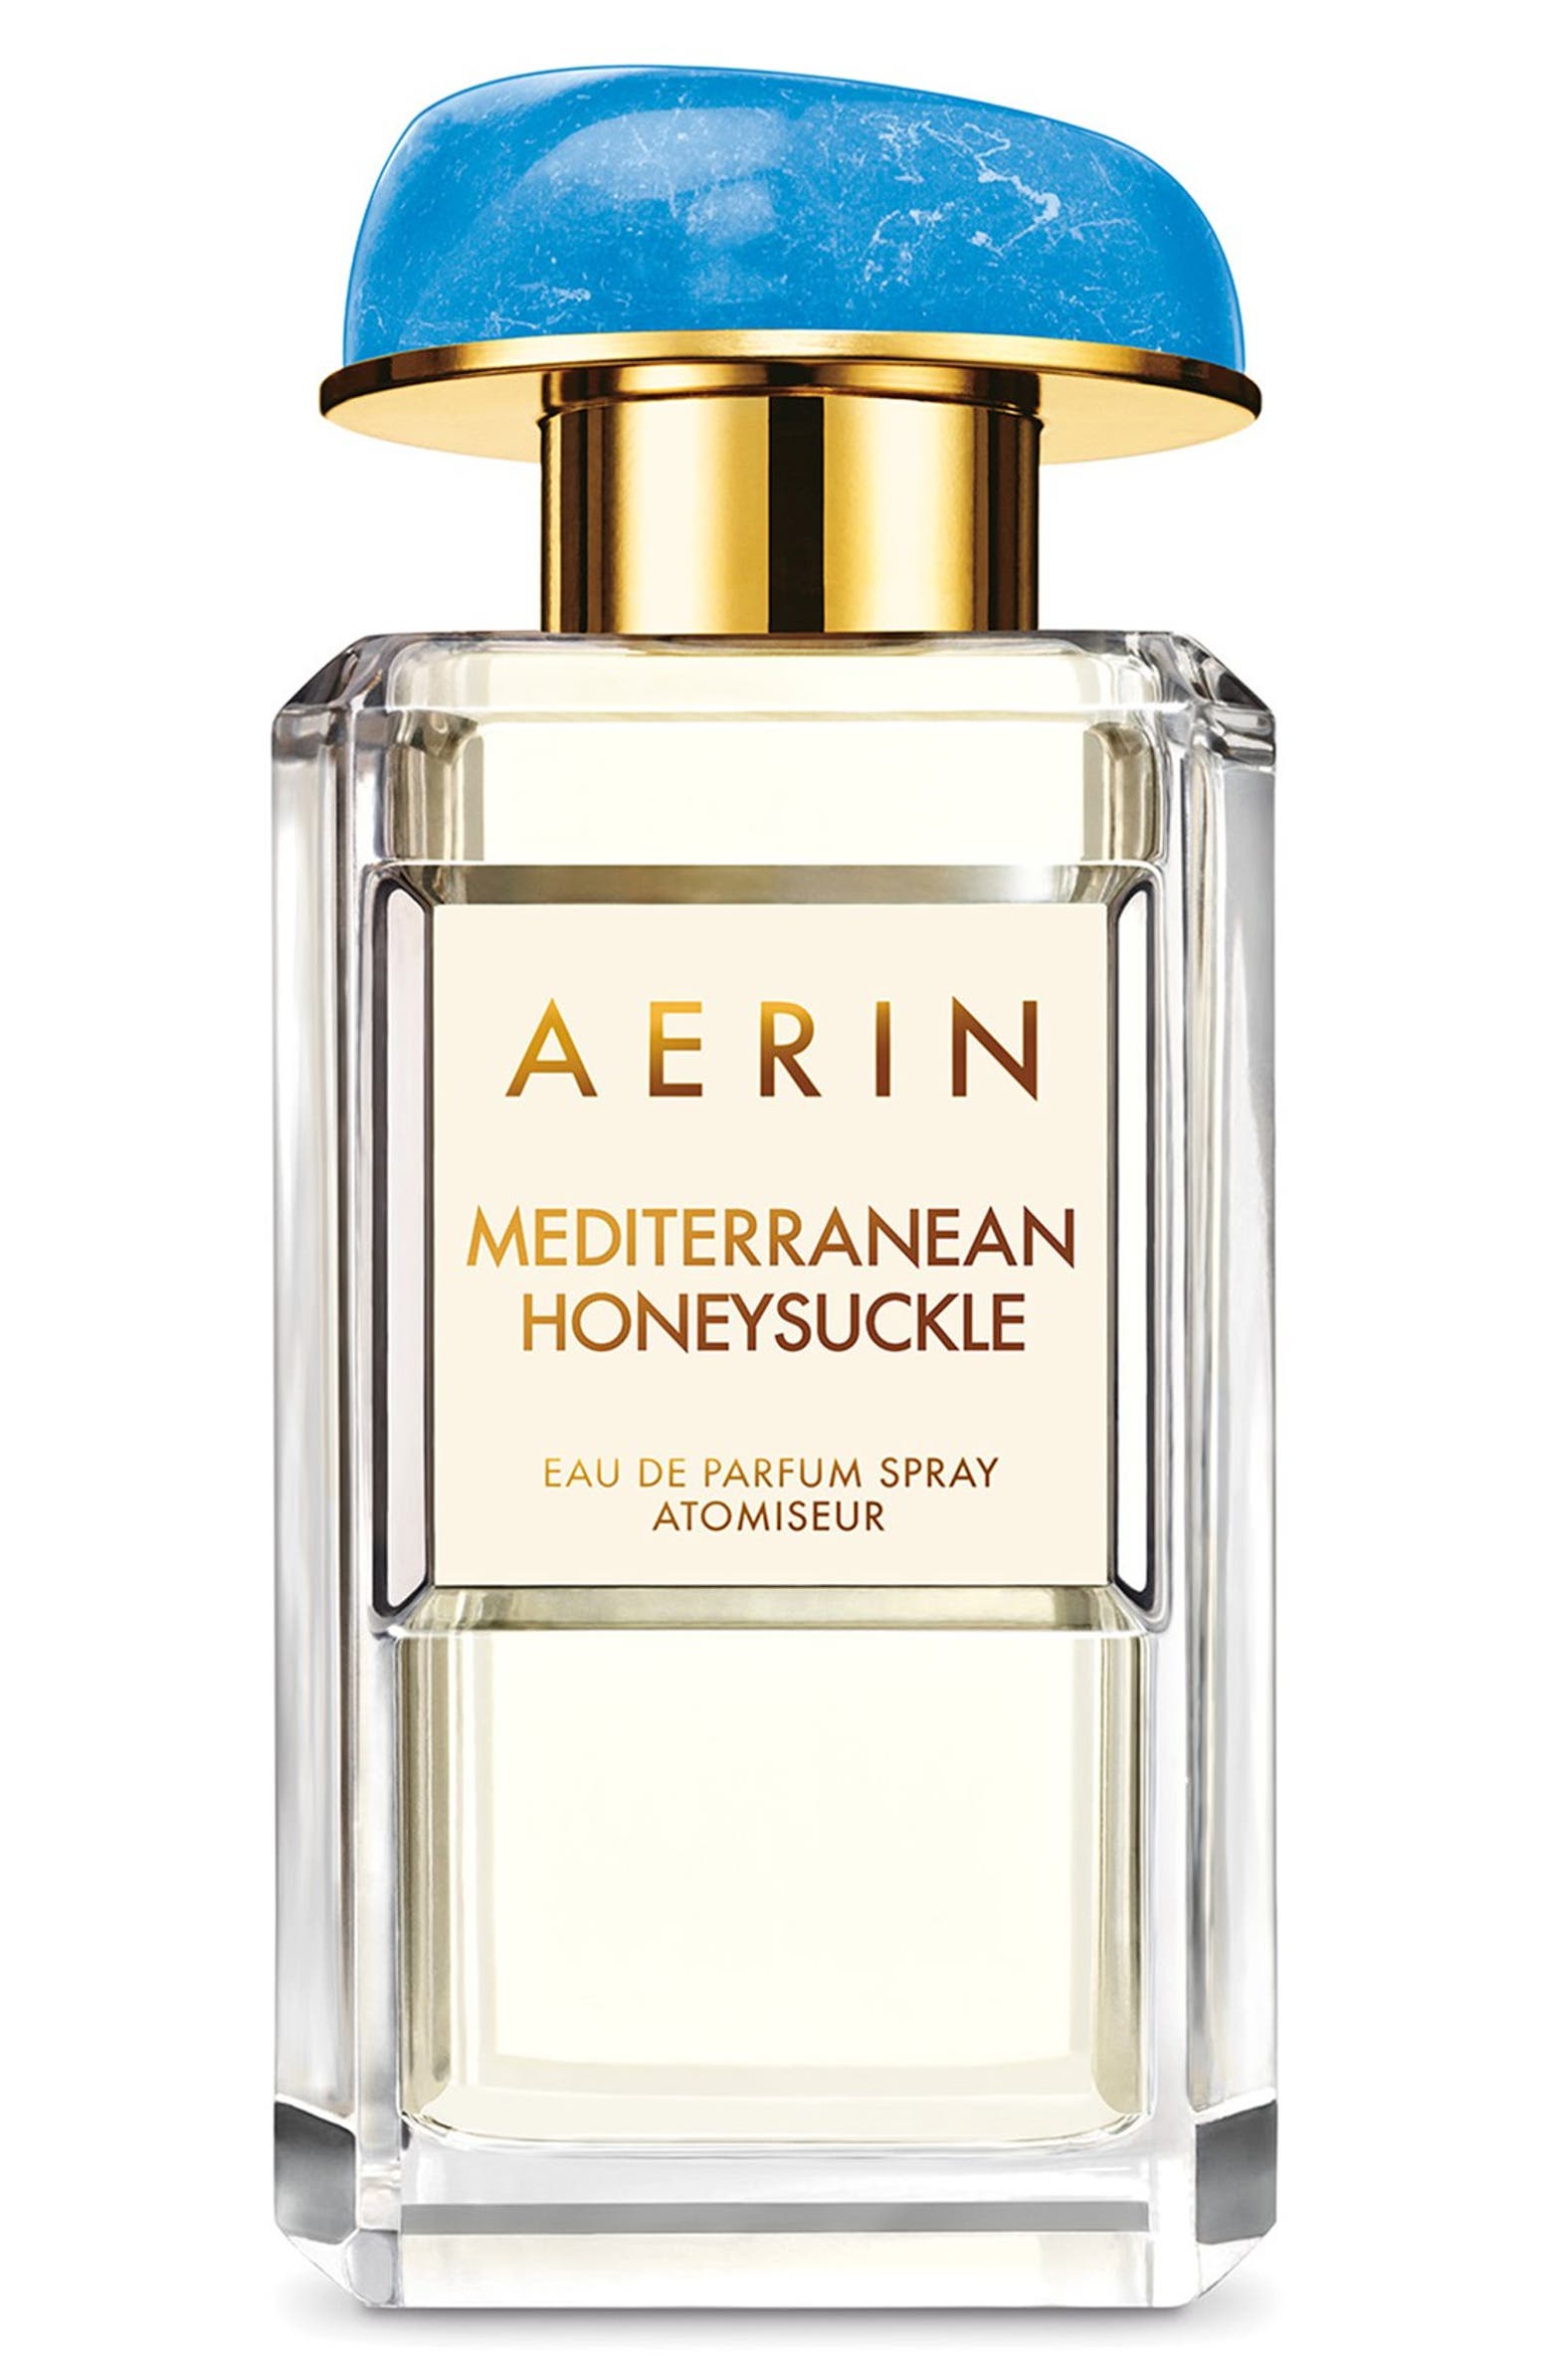 AERIN Beauty Mediterranean Honeysuckle Eau de Parfum